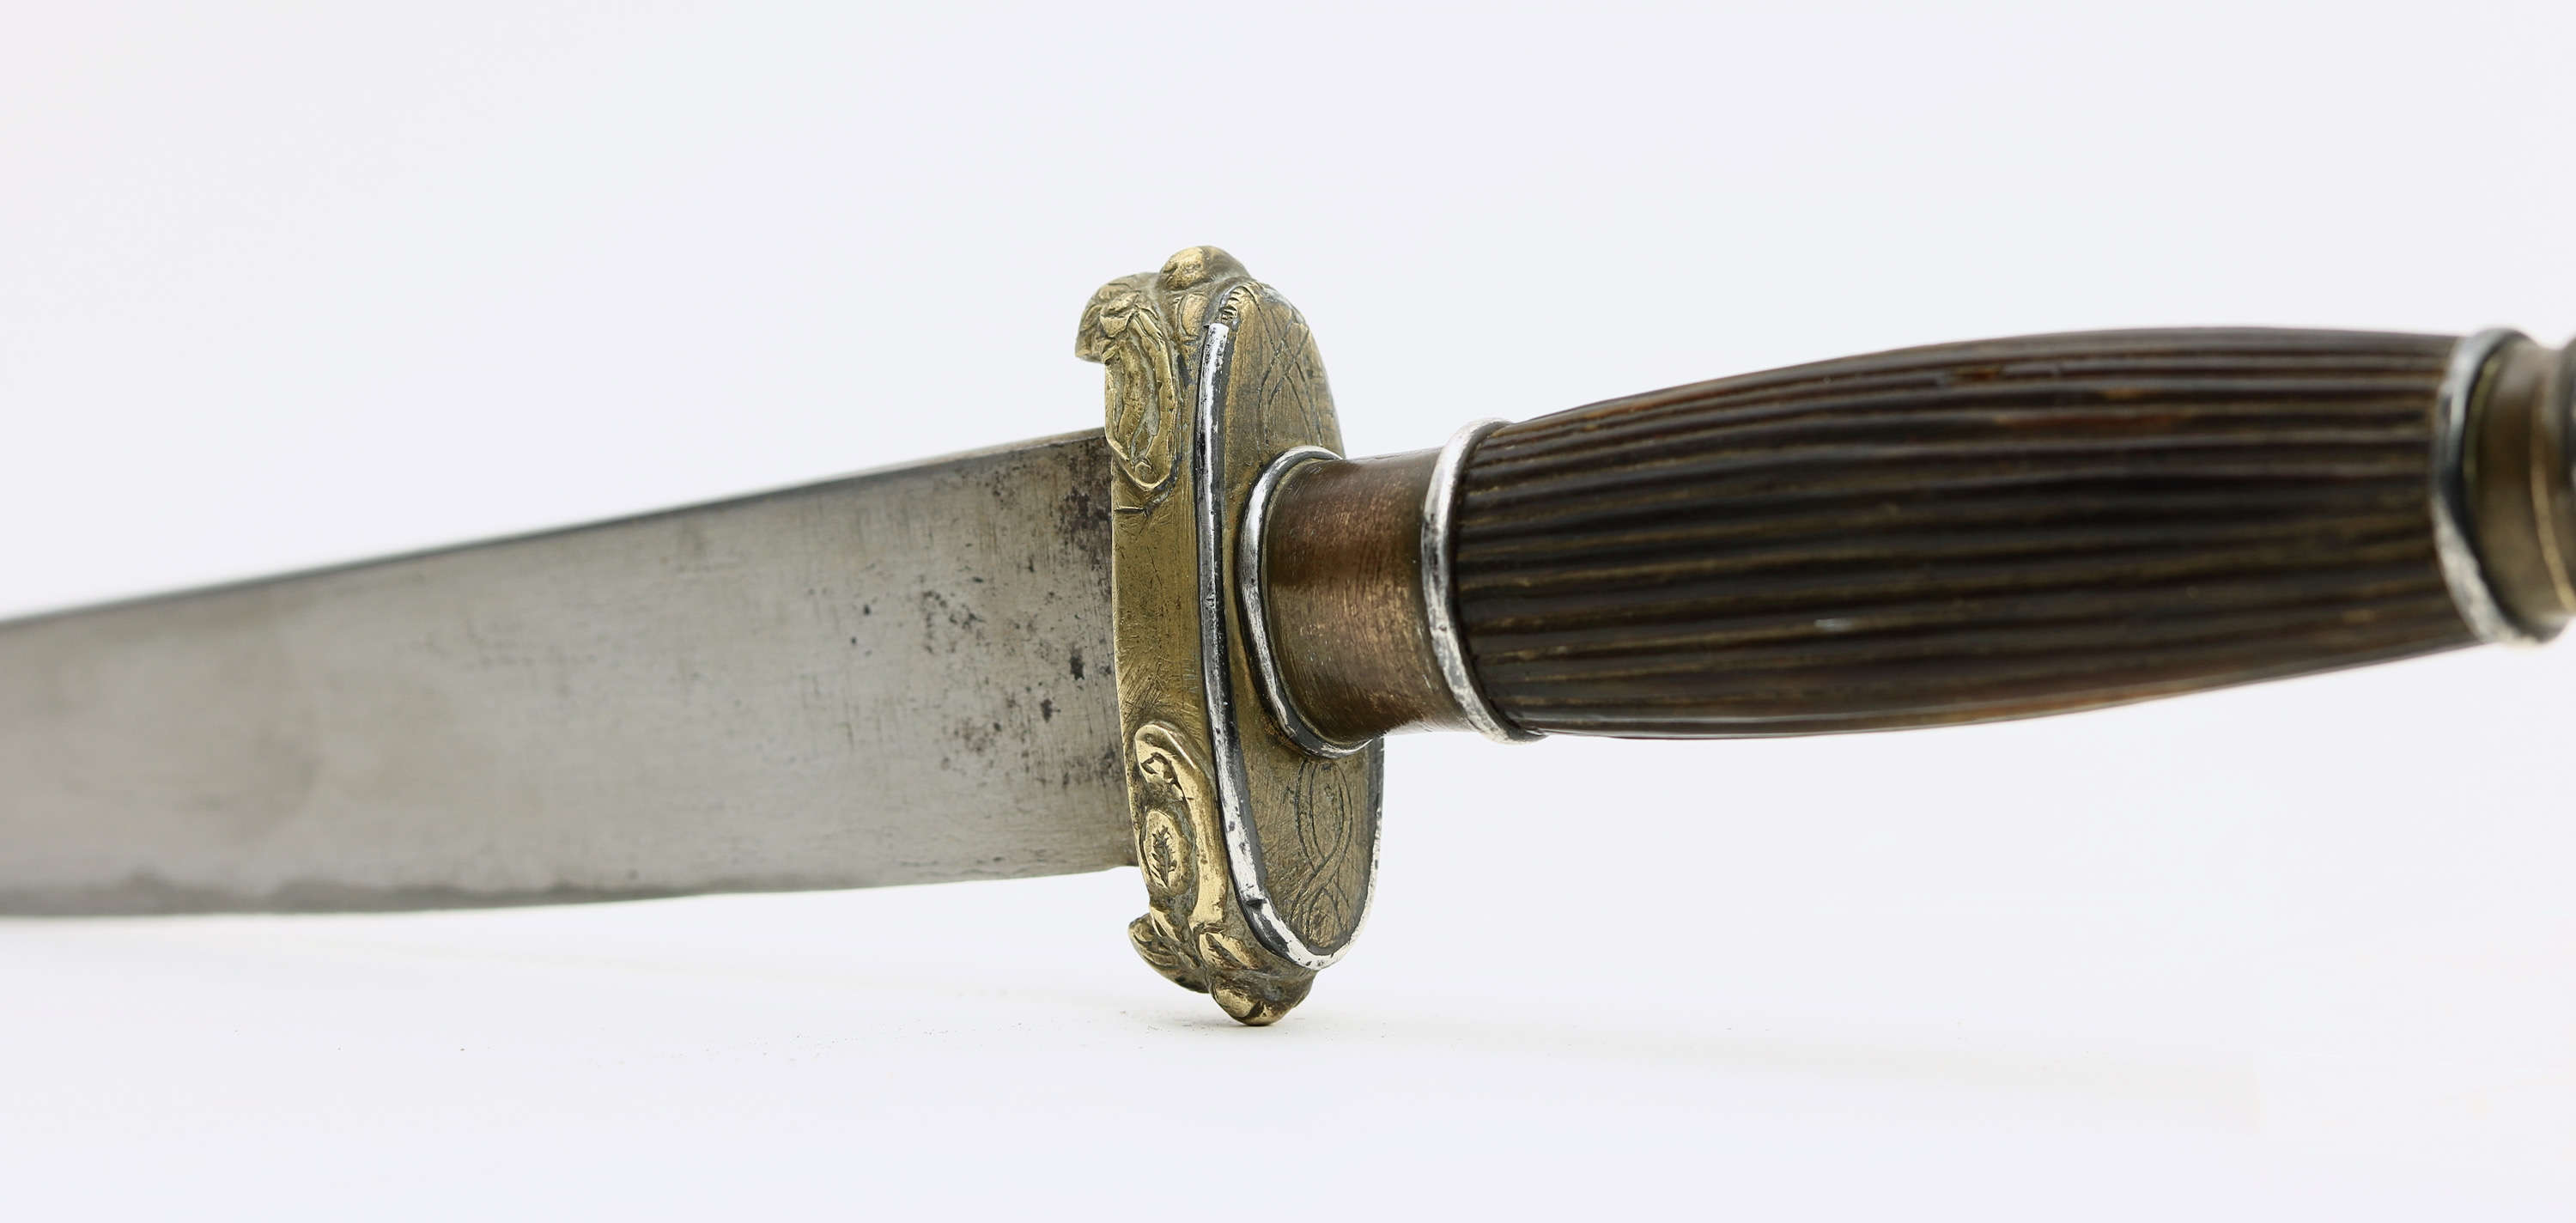 Good antique Vietnamese fighting knife